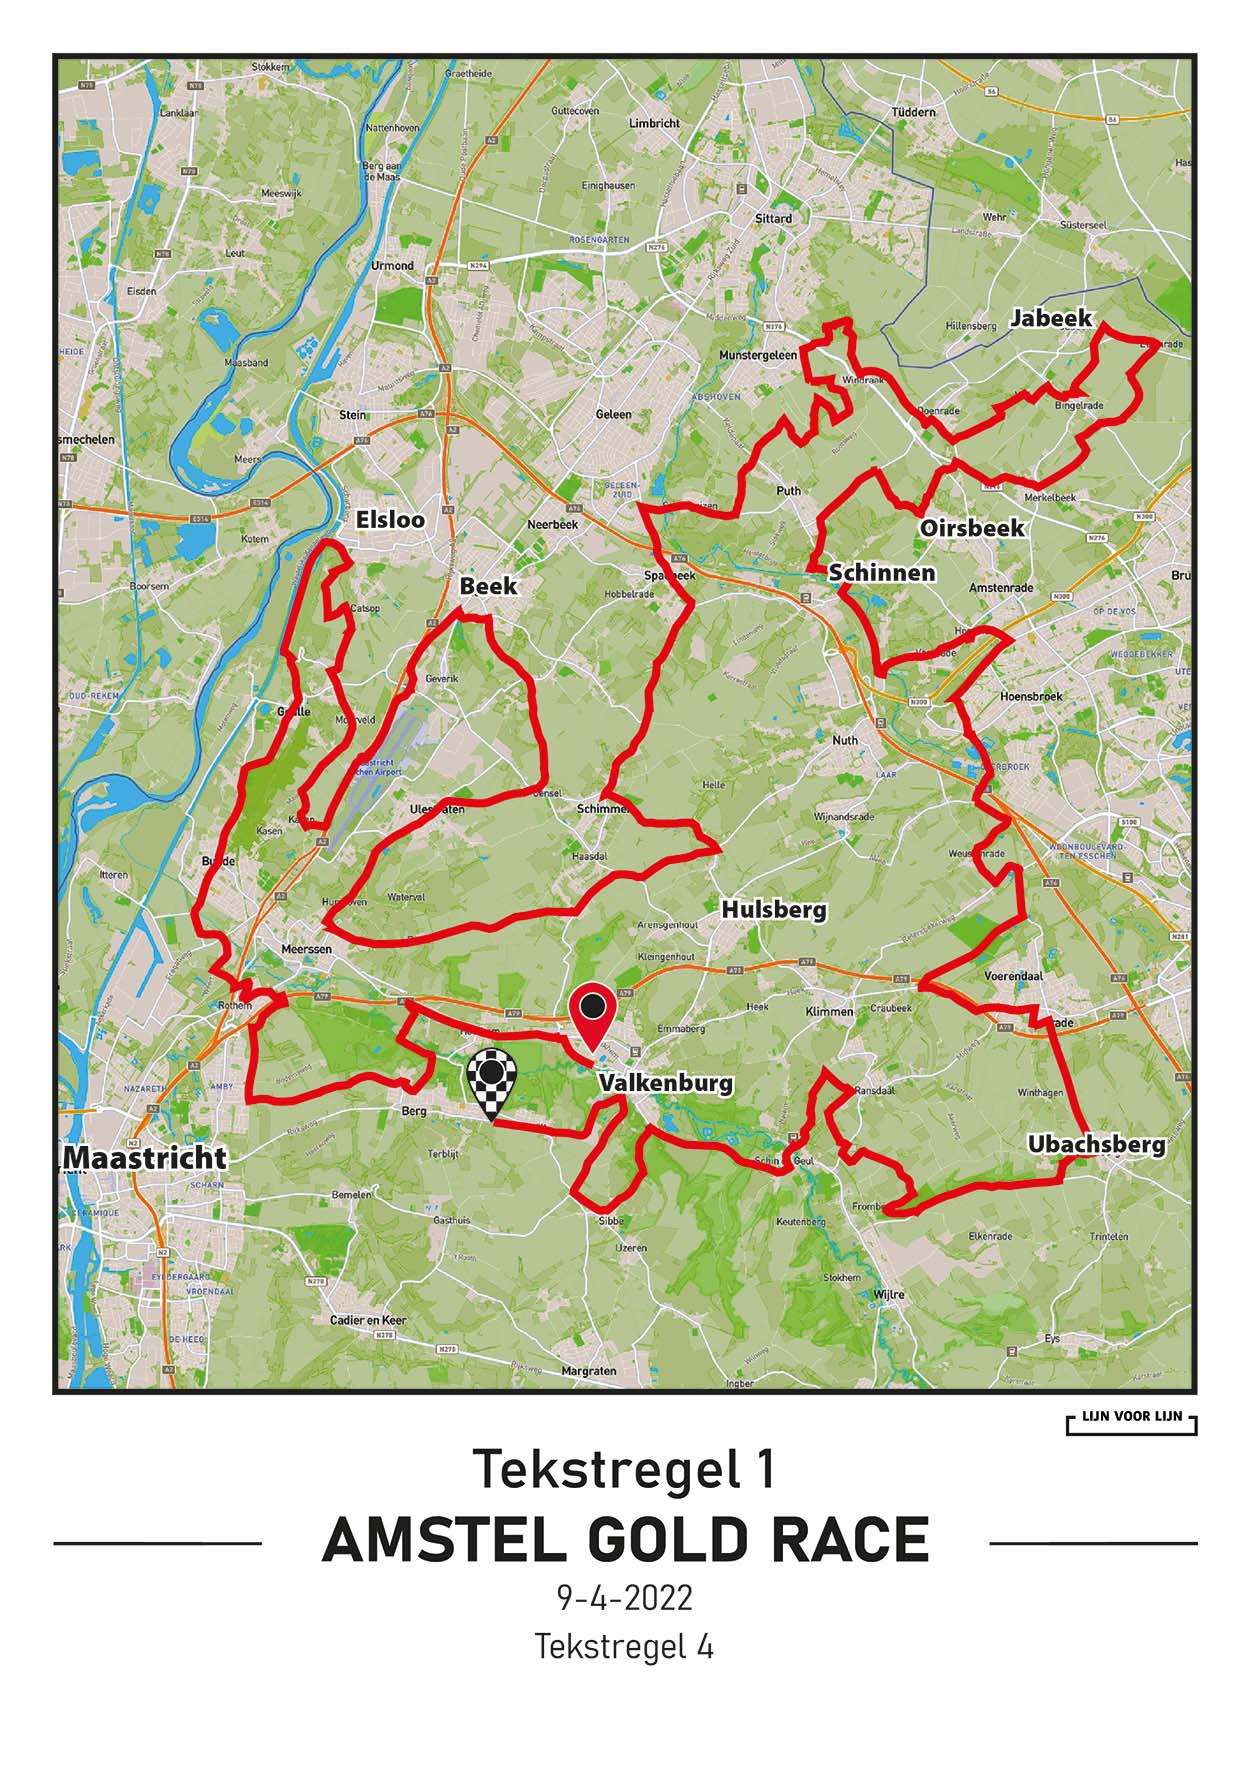 Amstel Gold Race 125km, 2022